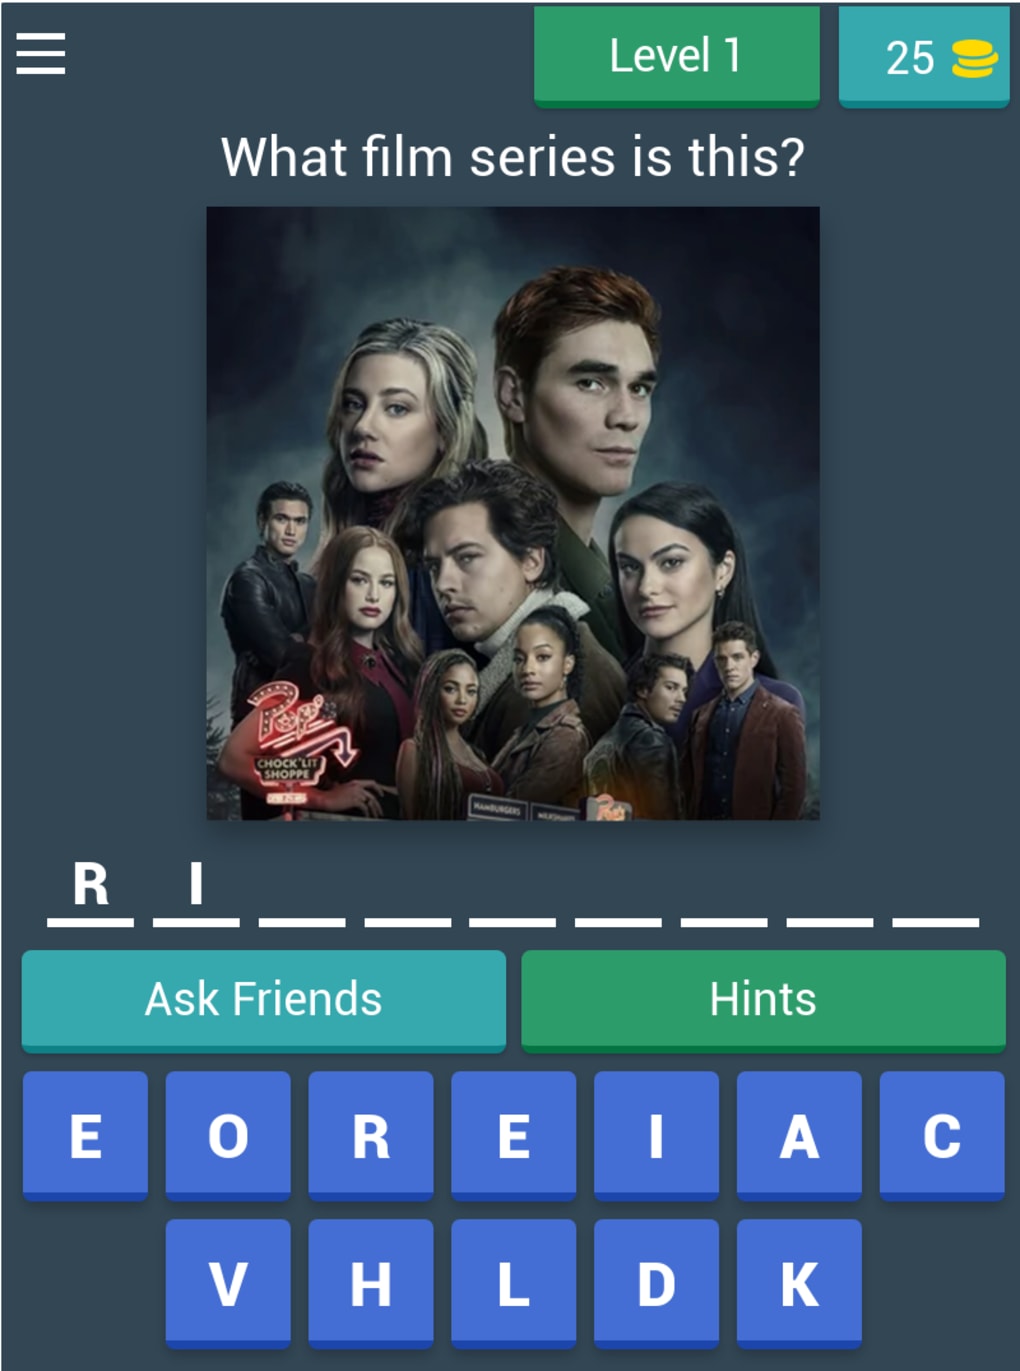 Riverdale Quiz APK para Android - Download